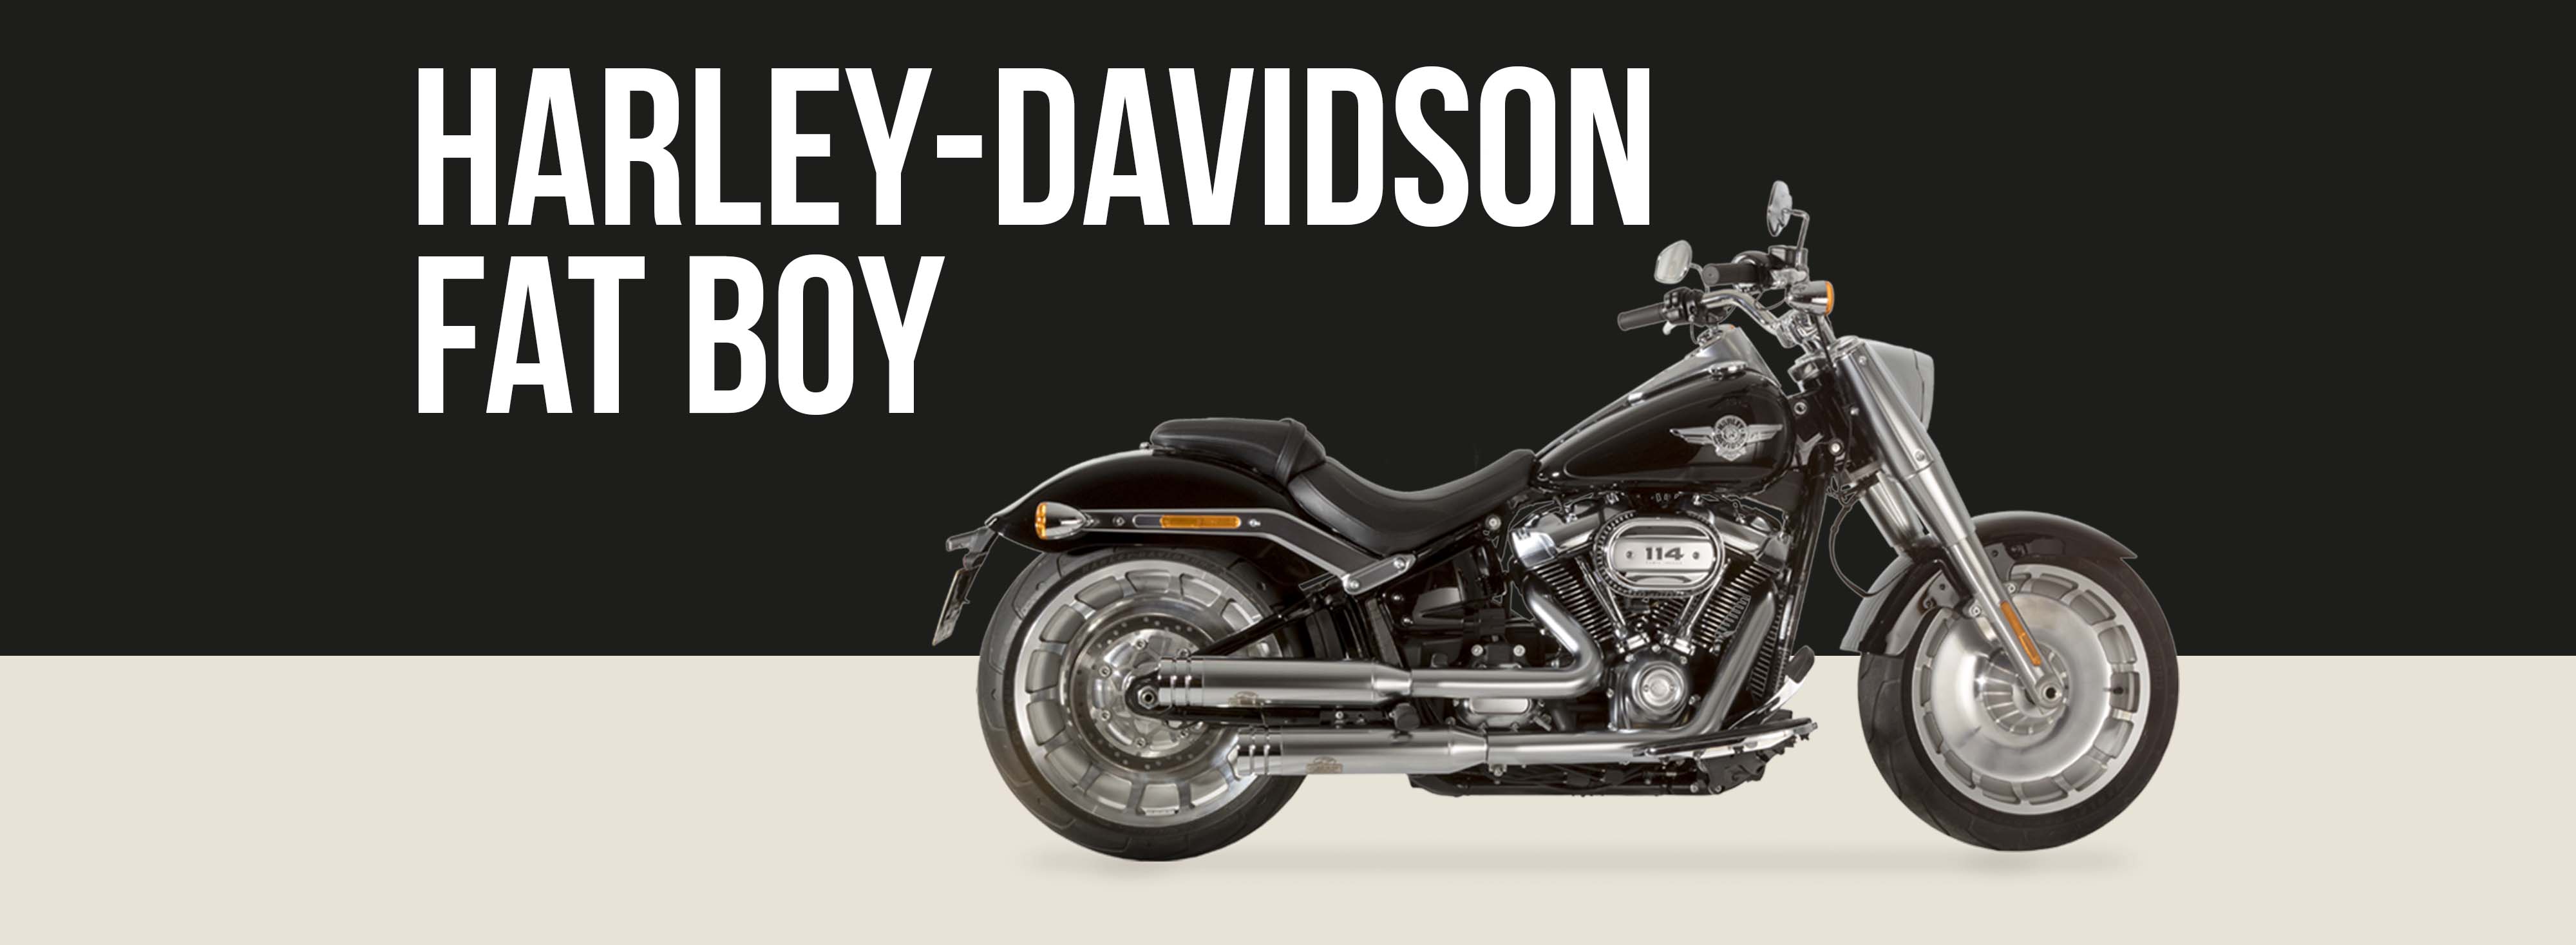 Harley-davidson Fat Boy Motorcycle Brand Page Header